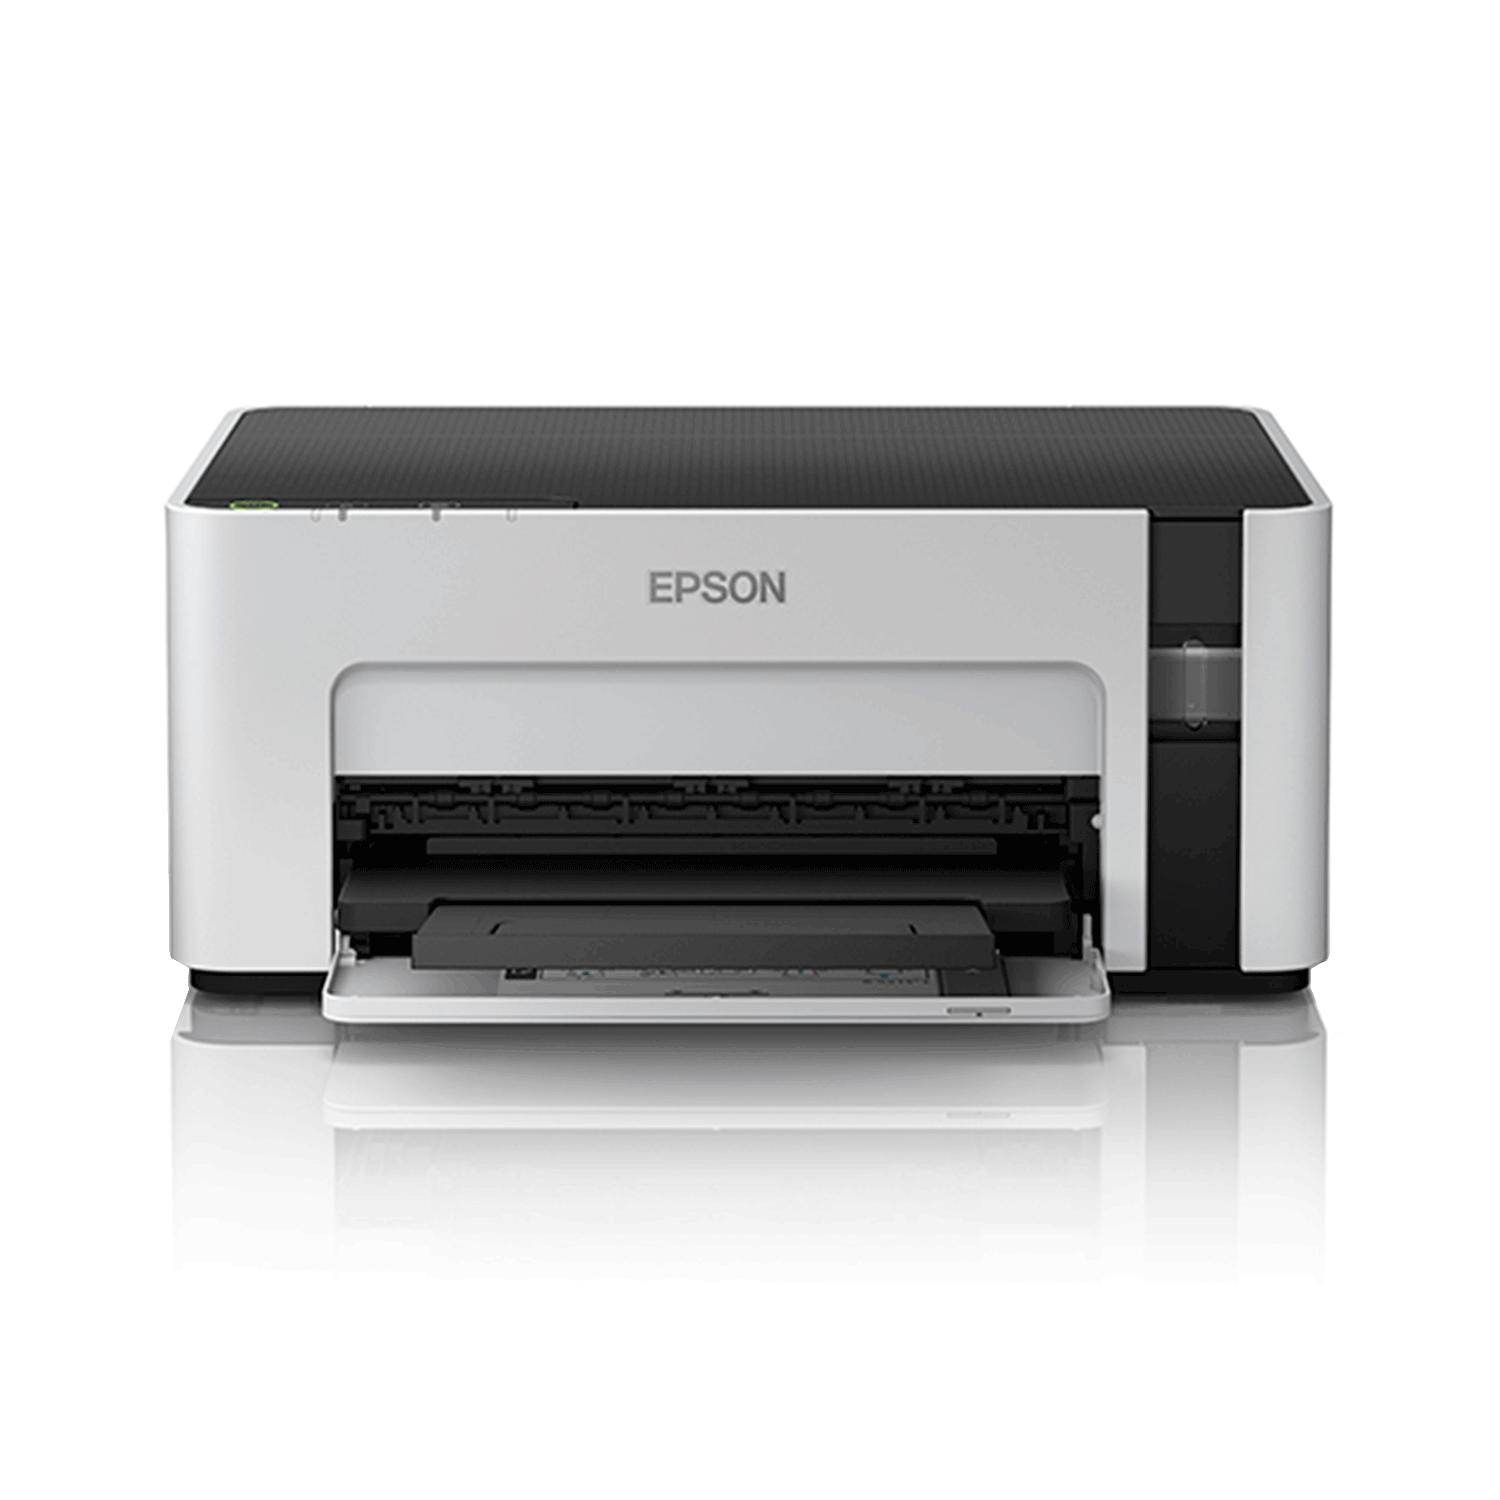 Impressora Monocromática Epson M1120 / Ecotank / Wi-Fi / Wireless / Bivolt - Preto e Branco